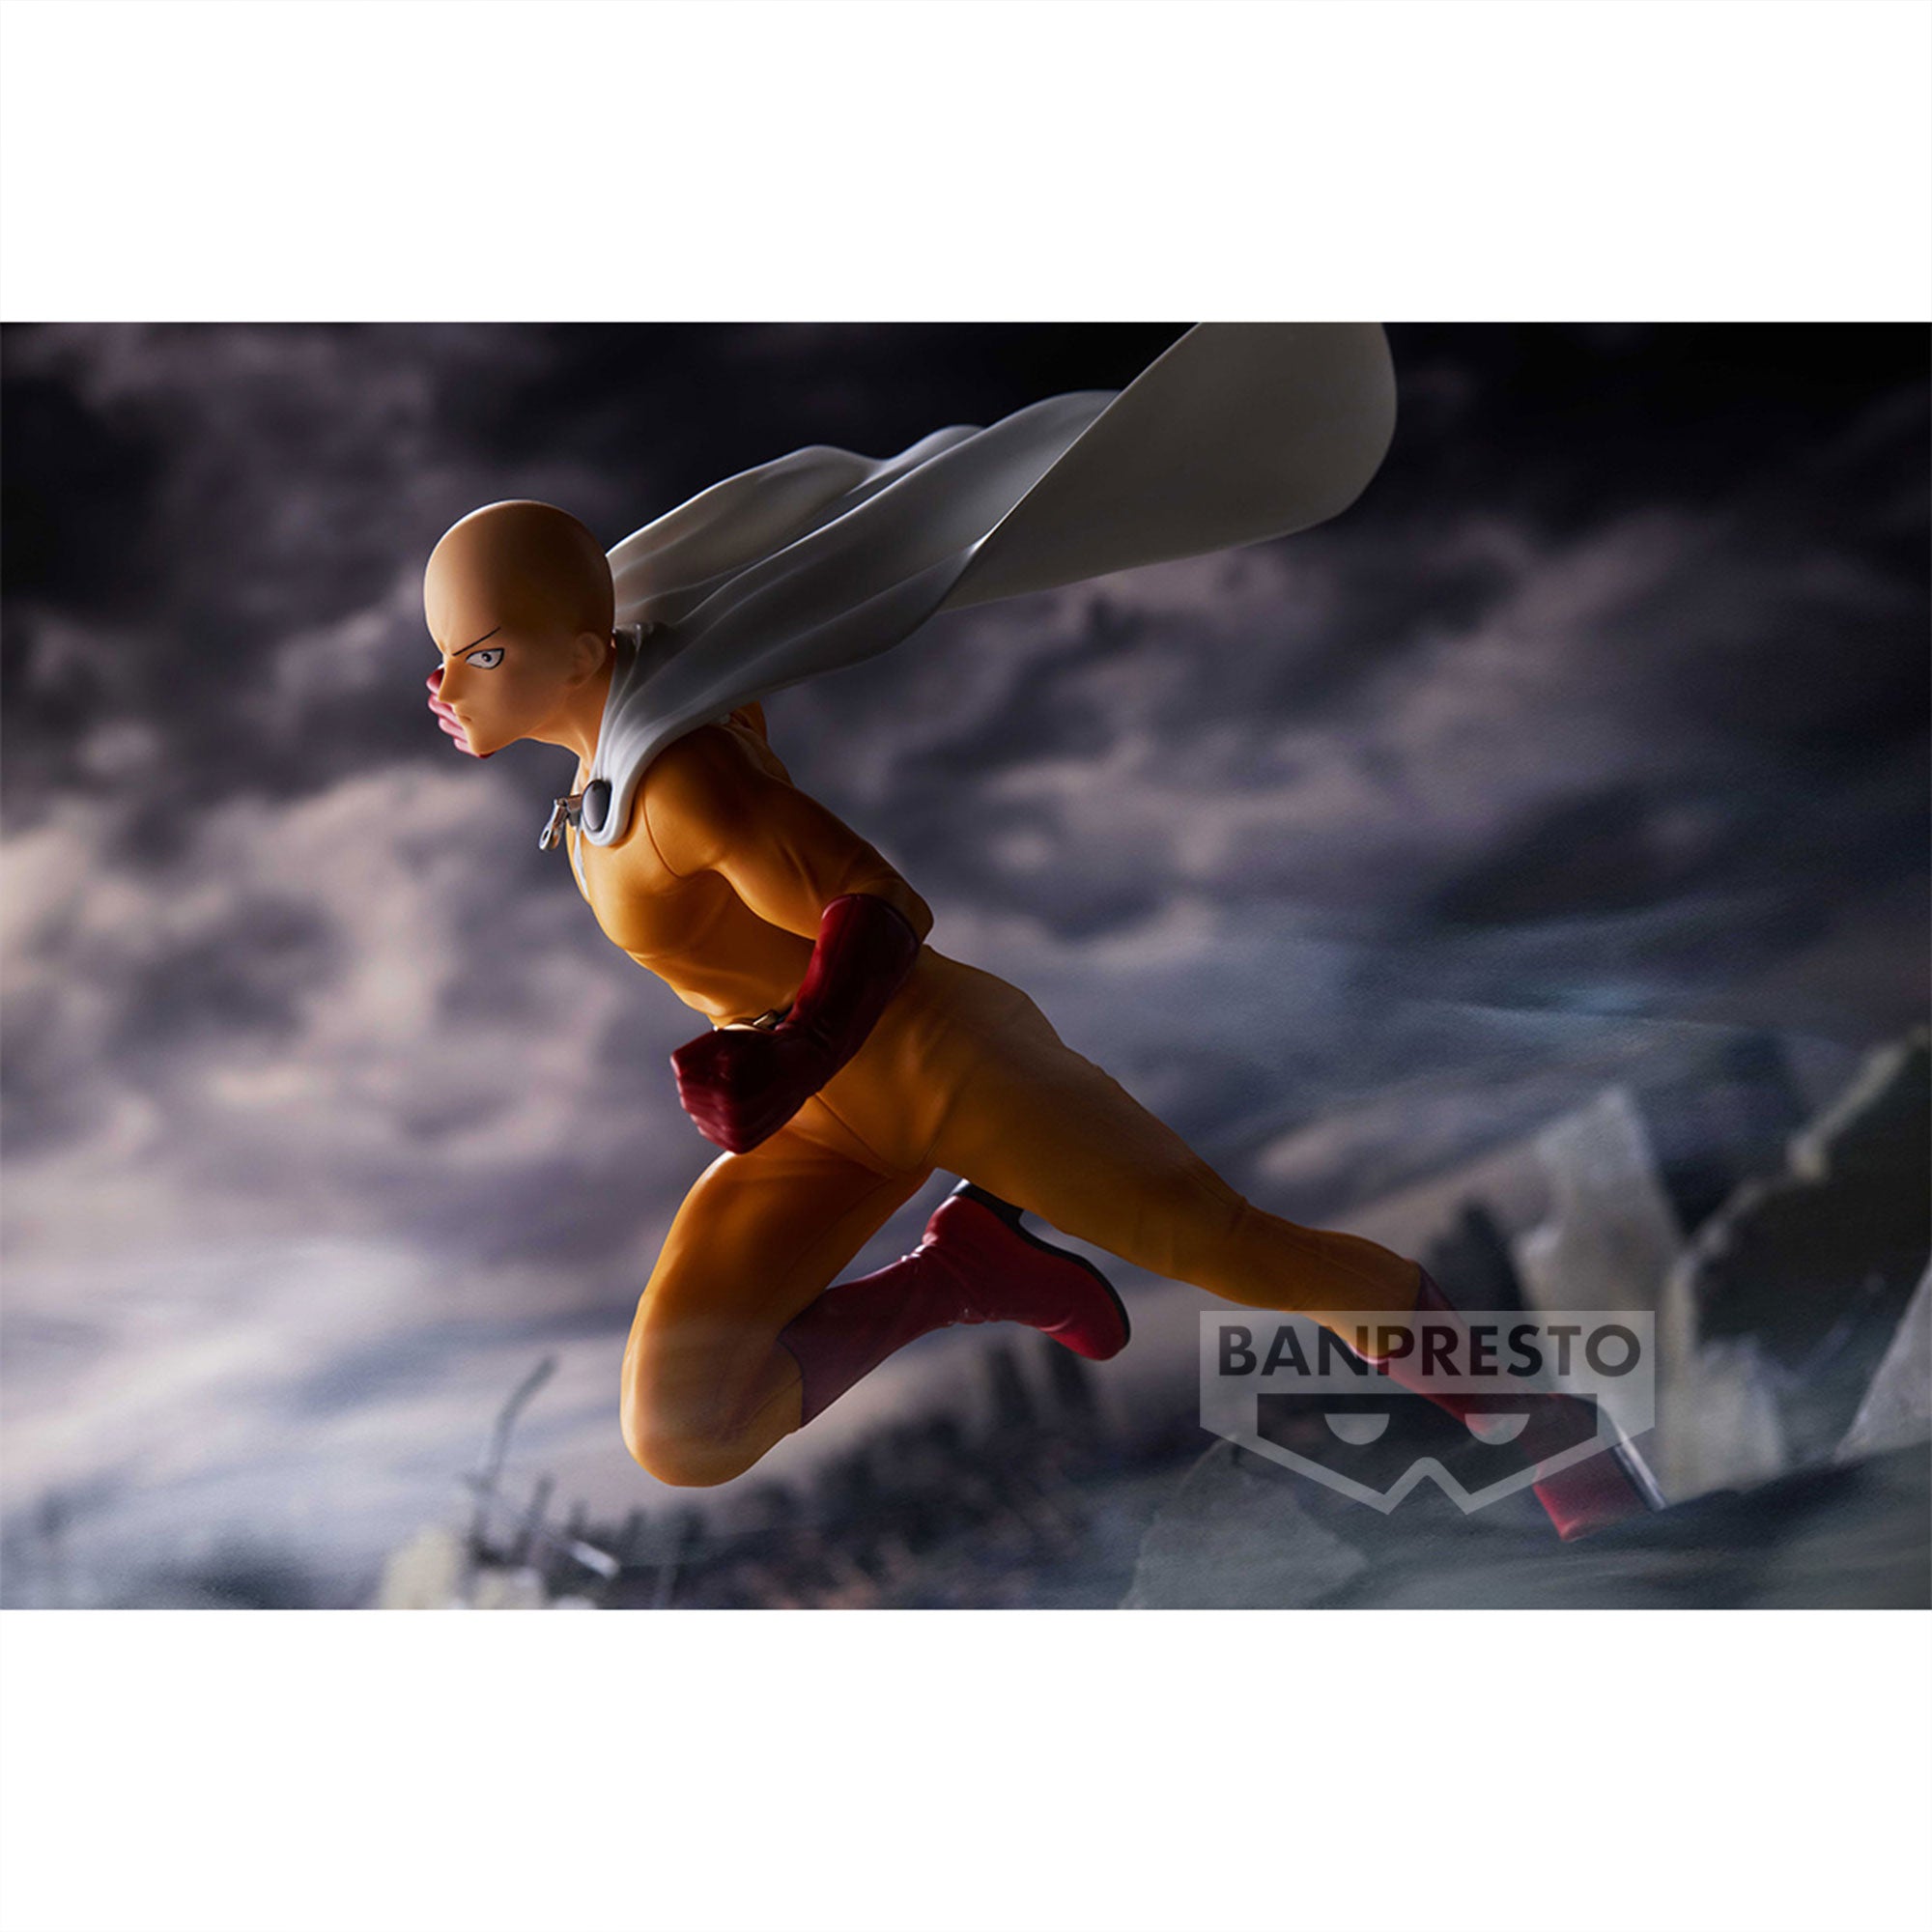 Sloppy Paint - McFarlane Toys One-Punch Man Saitama Action Figure